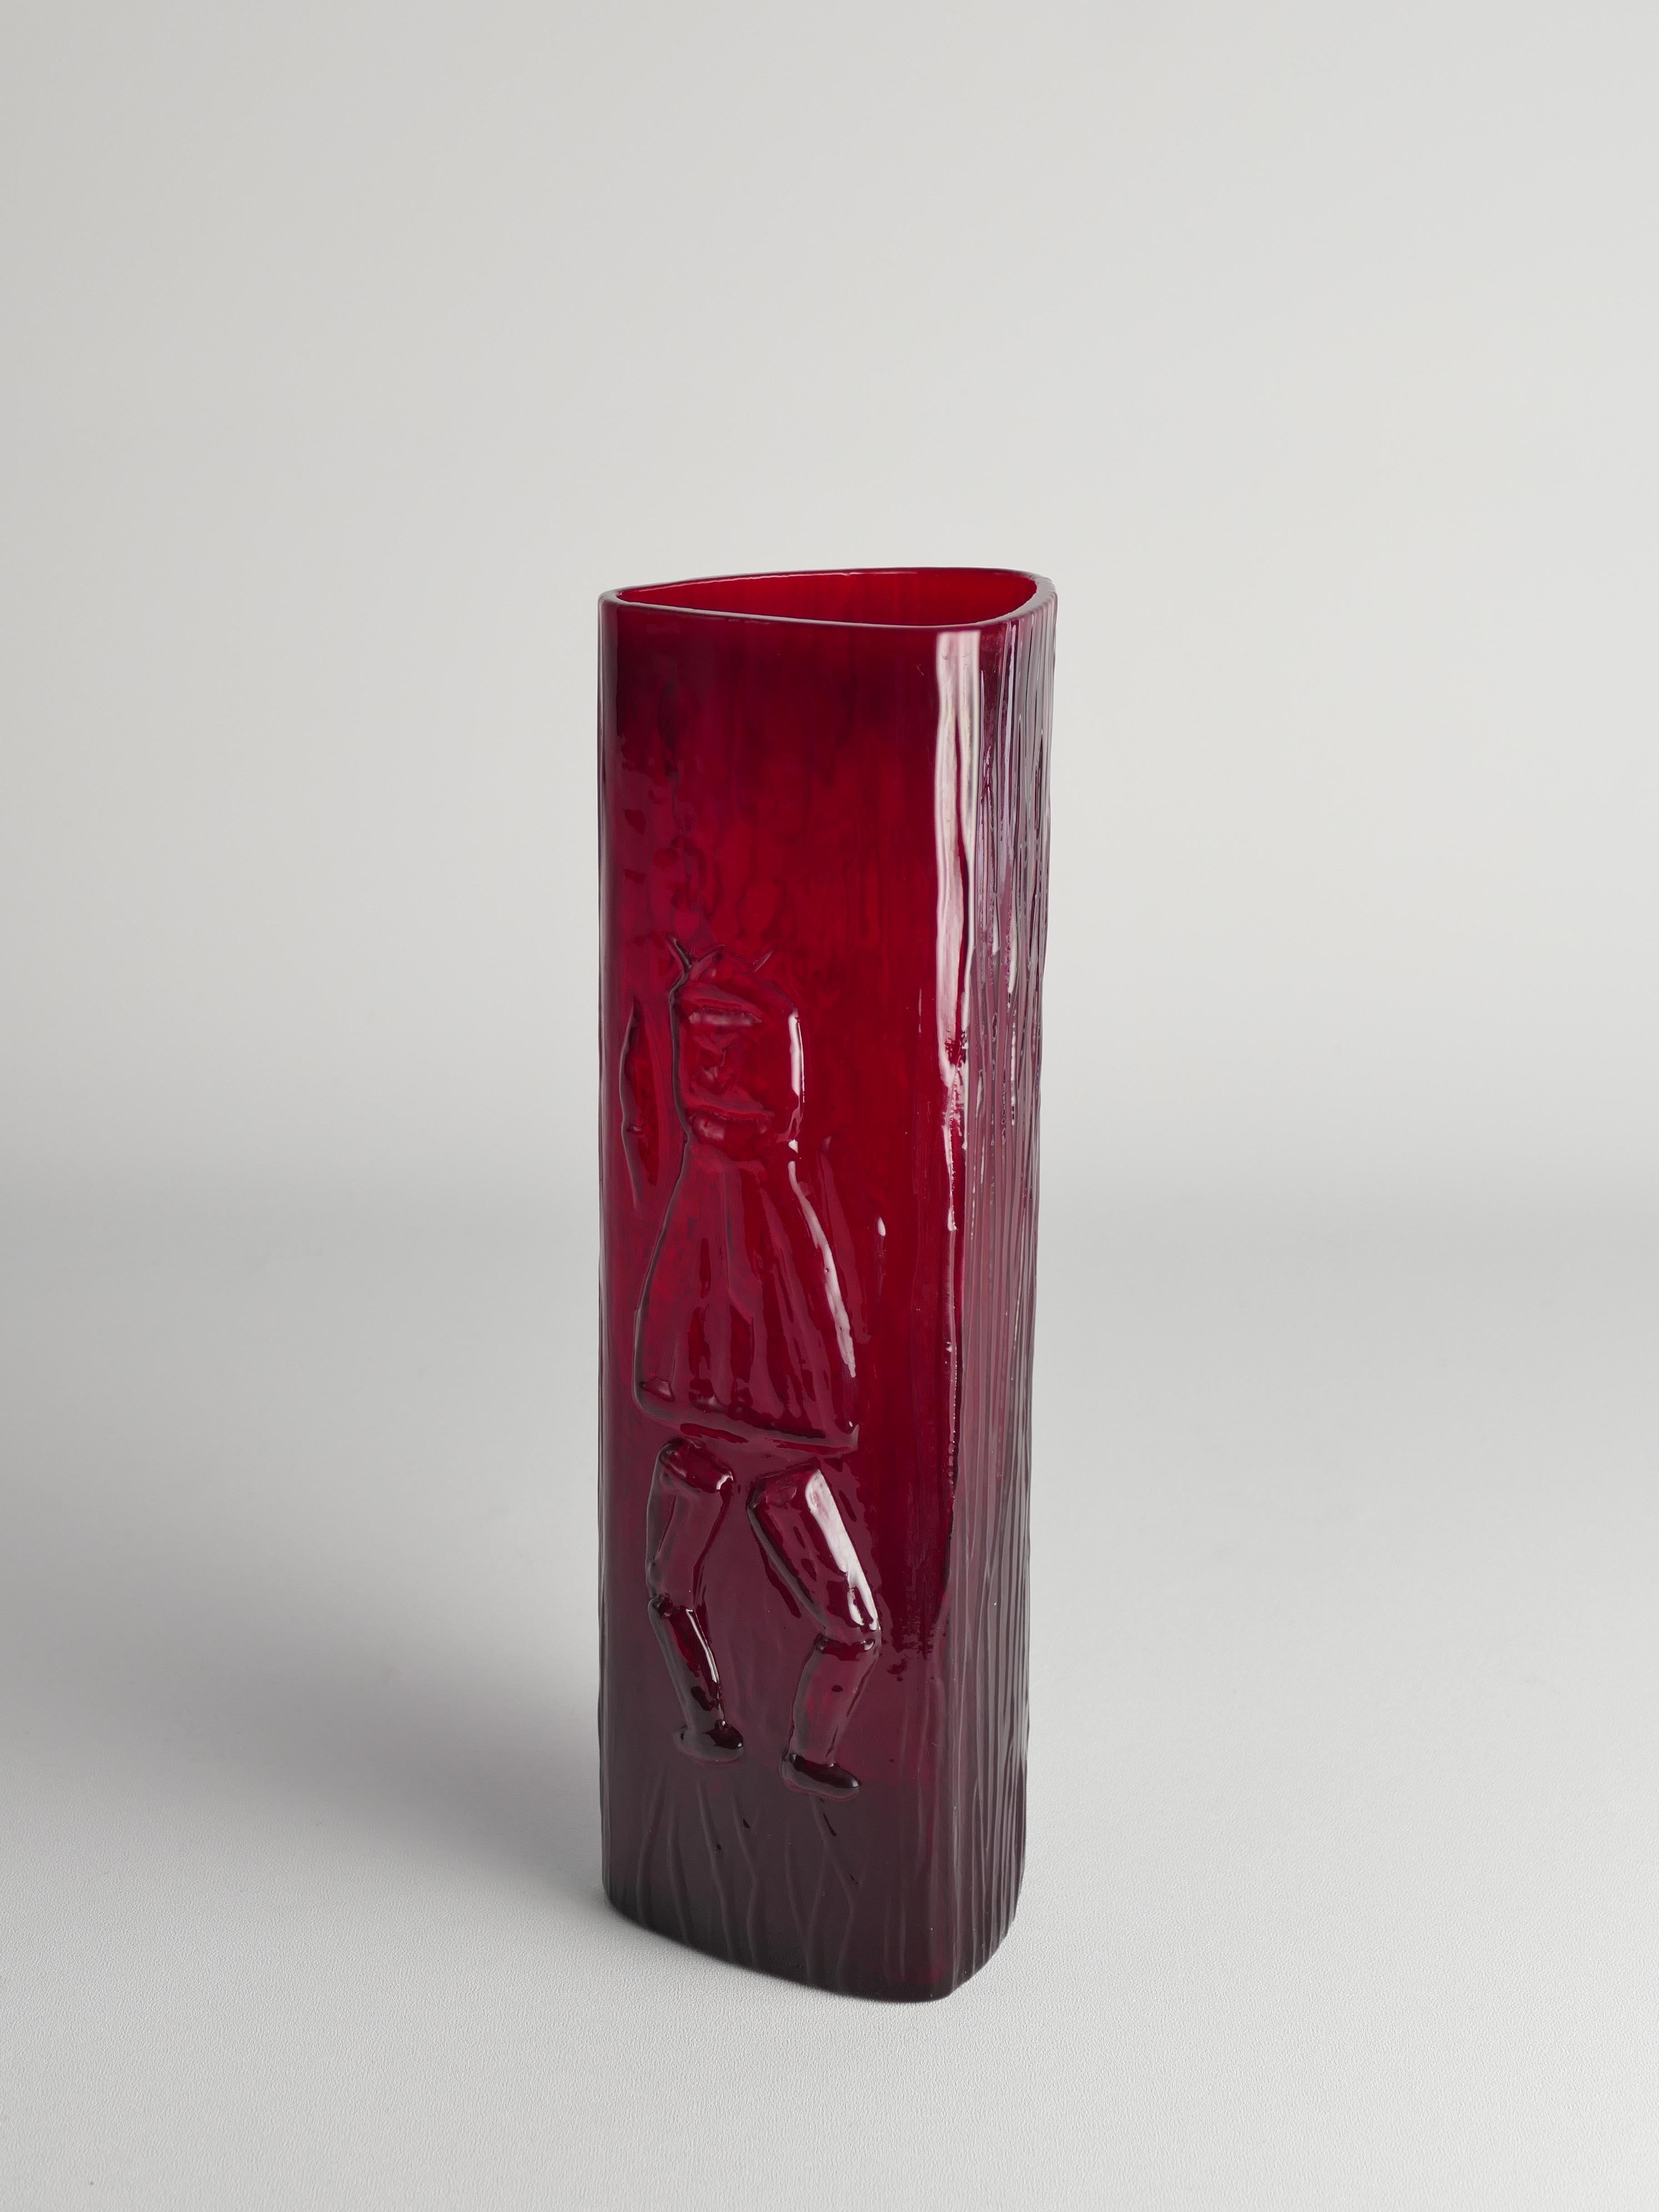 Blown Glass Swedish Red Devil Triangular Glass Vase by Christer Sjögren for Lindshammar For Sale